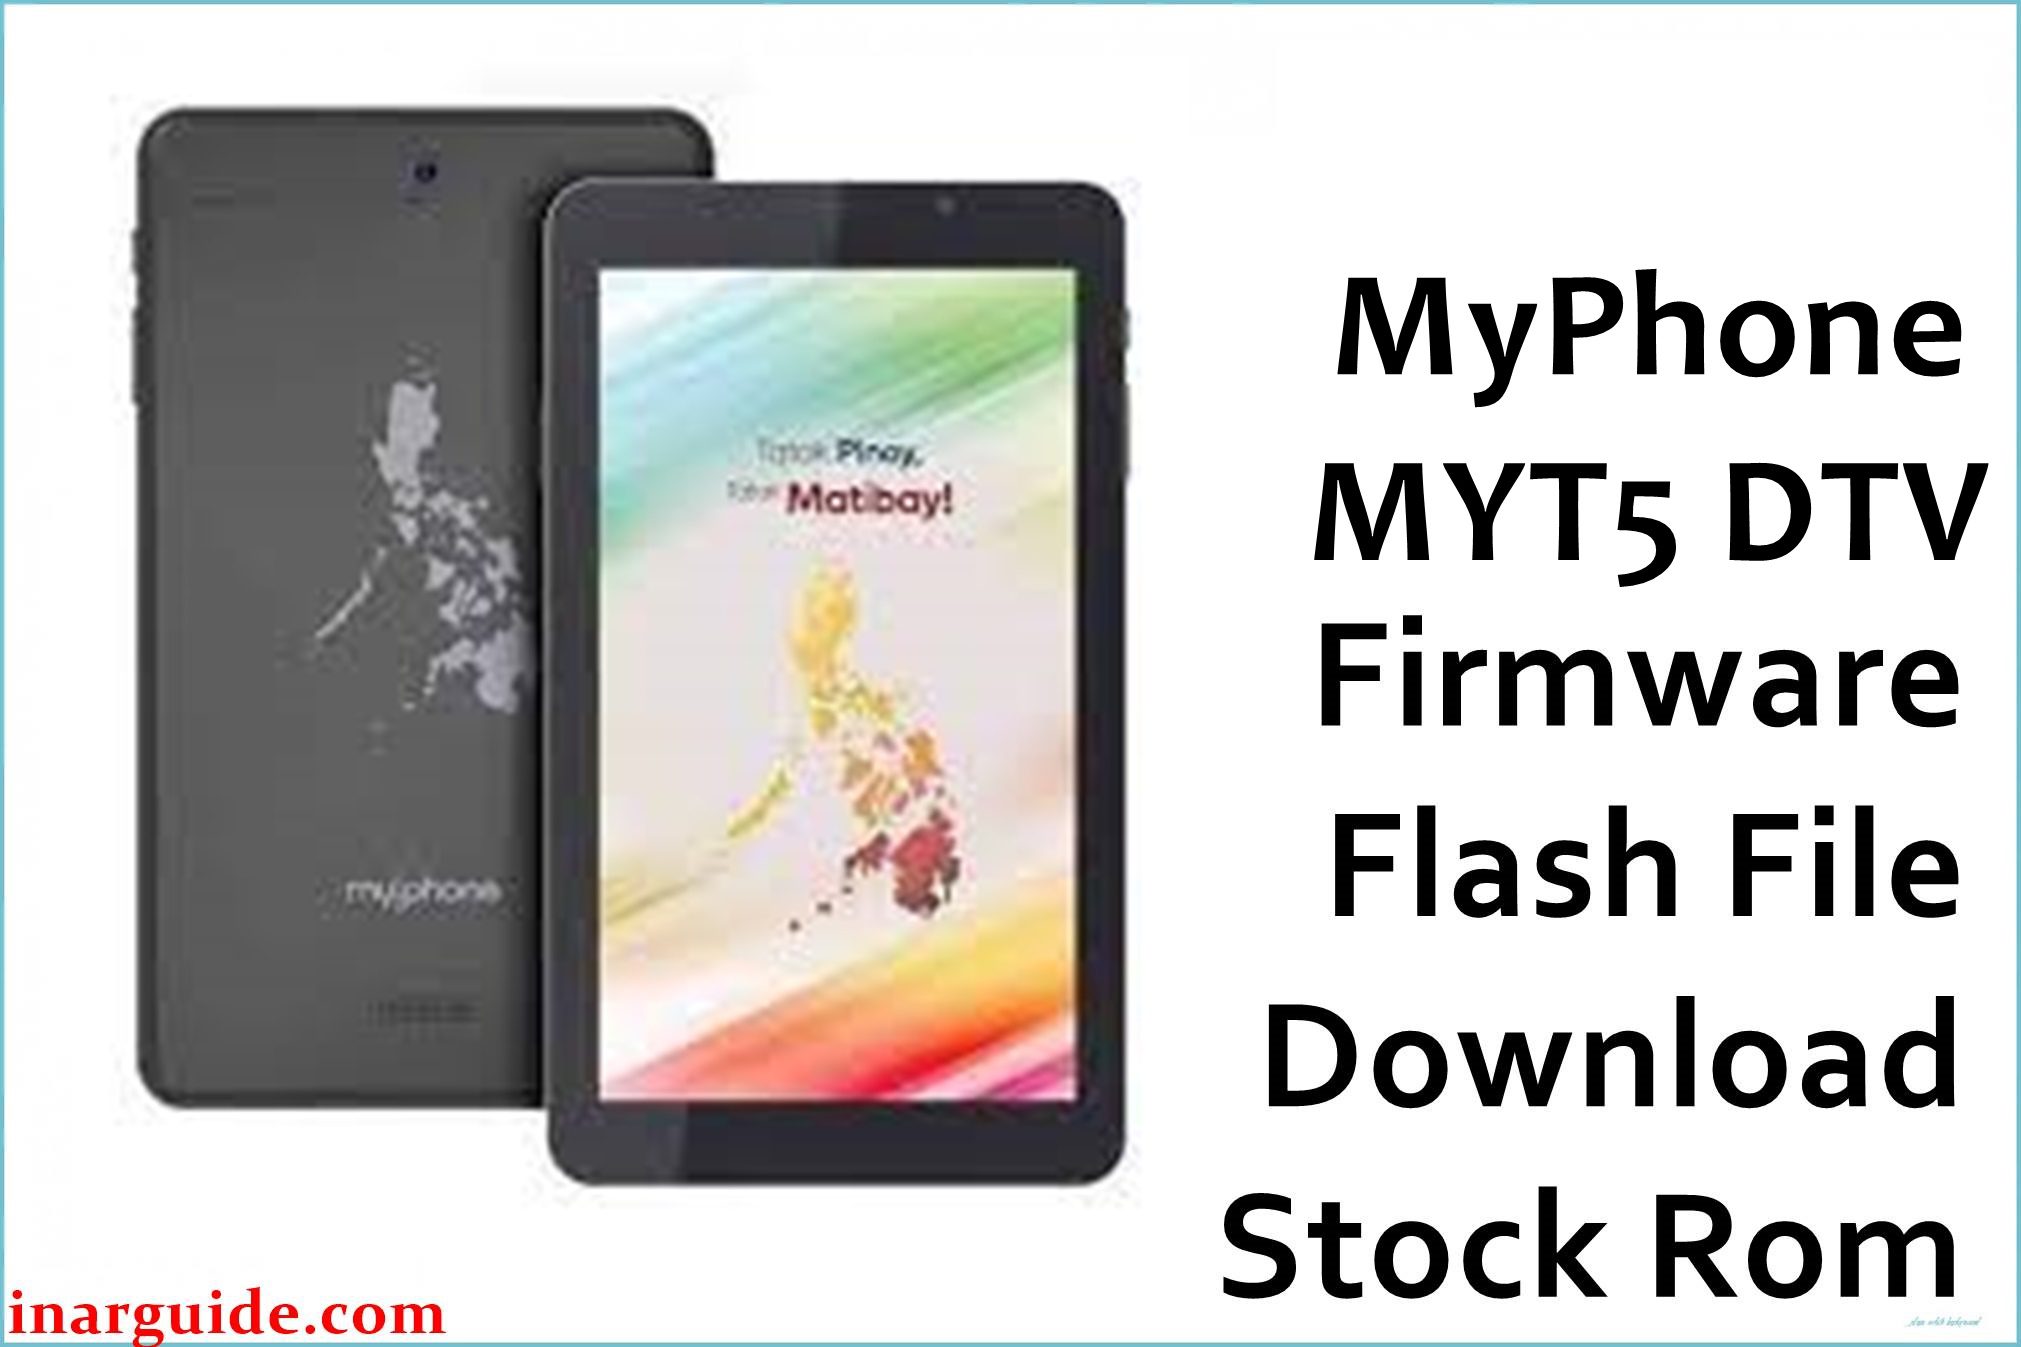 MyPhone MYT5 DTV